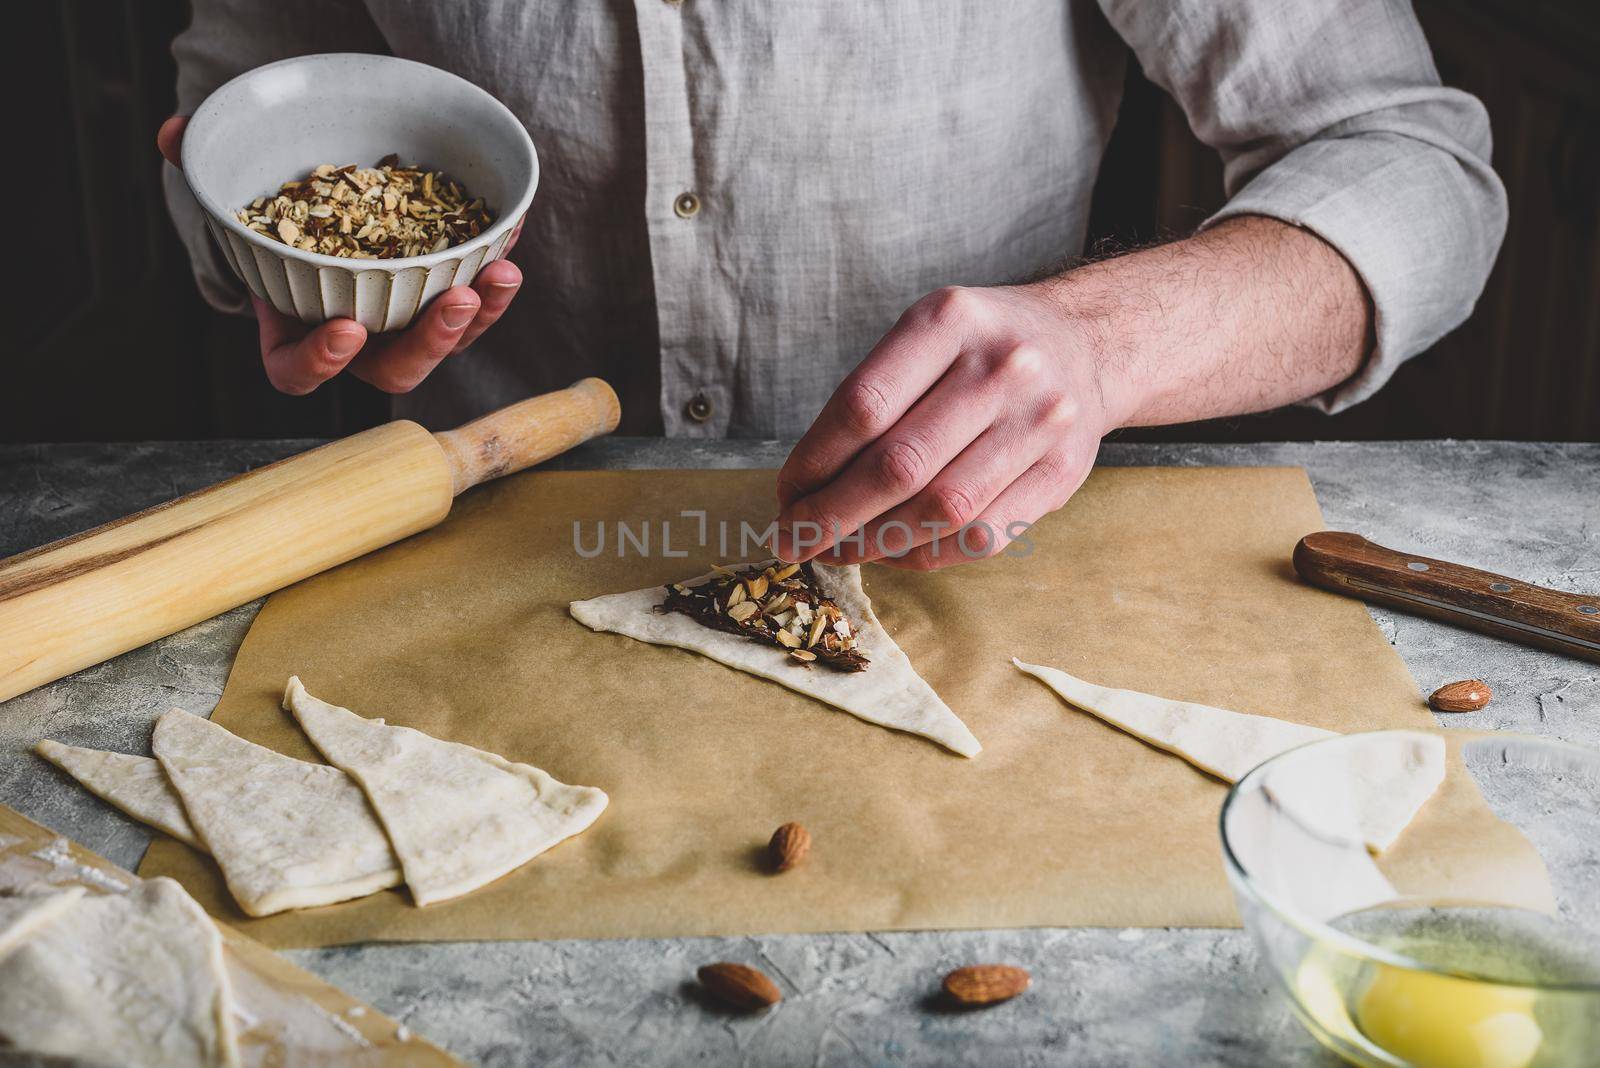 Homemade croissant preparing. Baker sprinkles chopped almonds on top of hazelnut spread